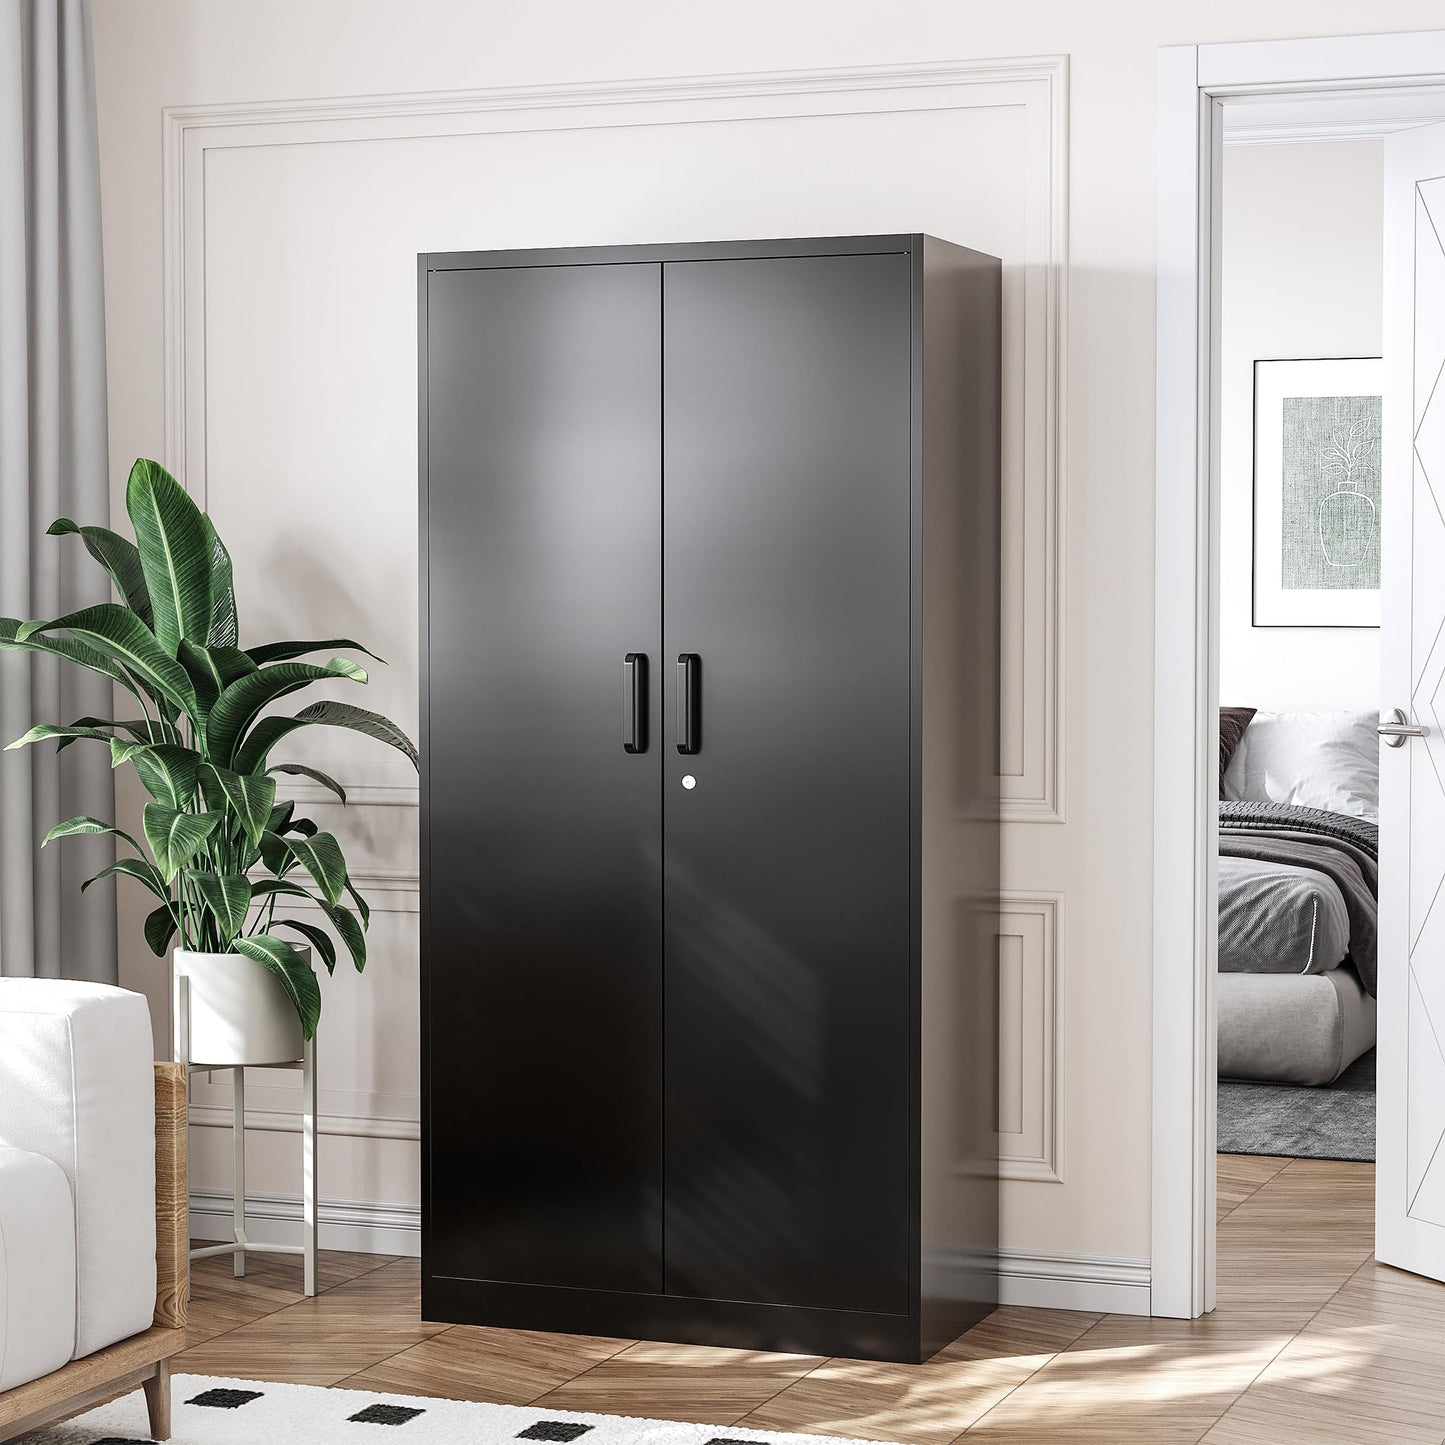 STANI Metal Storage Cabinet, Locking Metal Storage Cabinet with 4 Adjustable Shelves, 71”H×32”W×16”D Tall Metal Storage Cabinet for